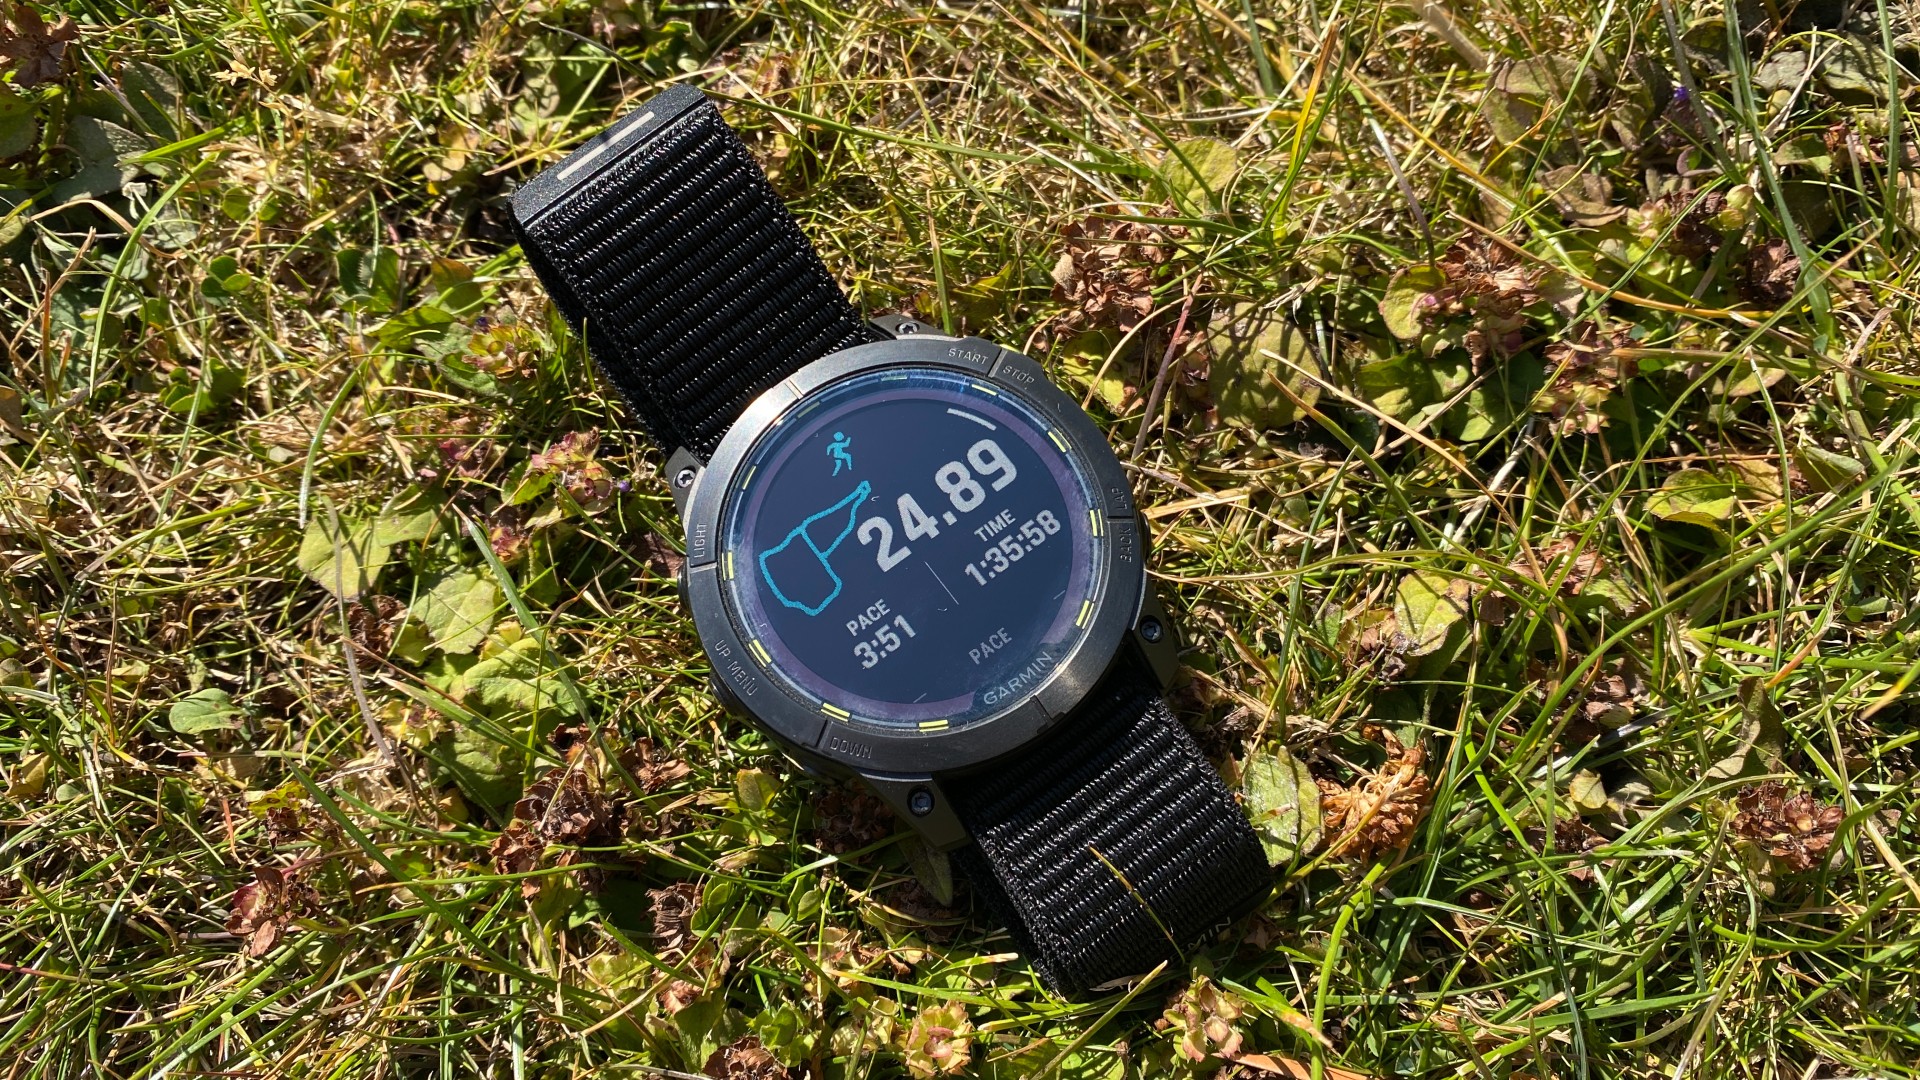 Garmin Enduro 2 multisport GPS watch